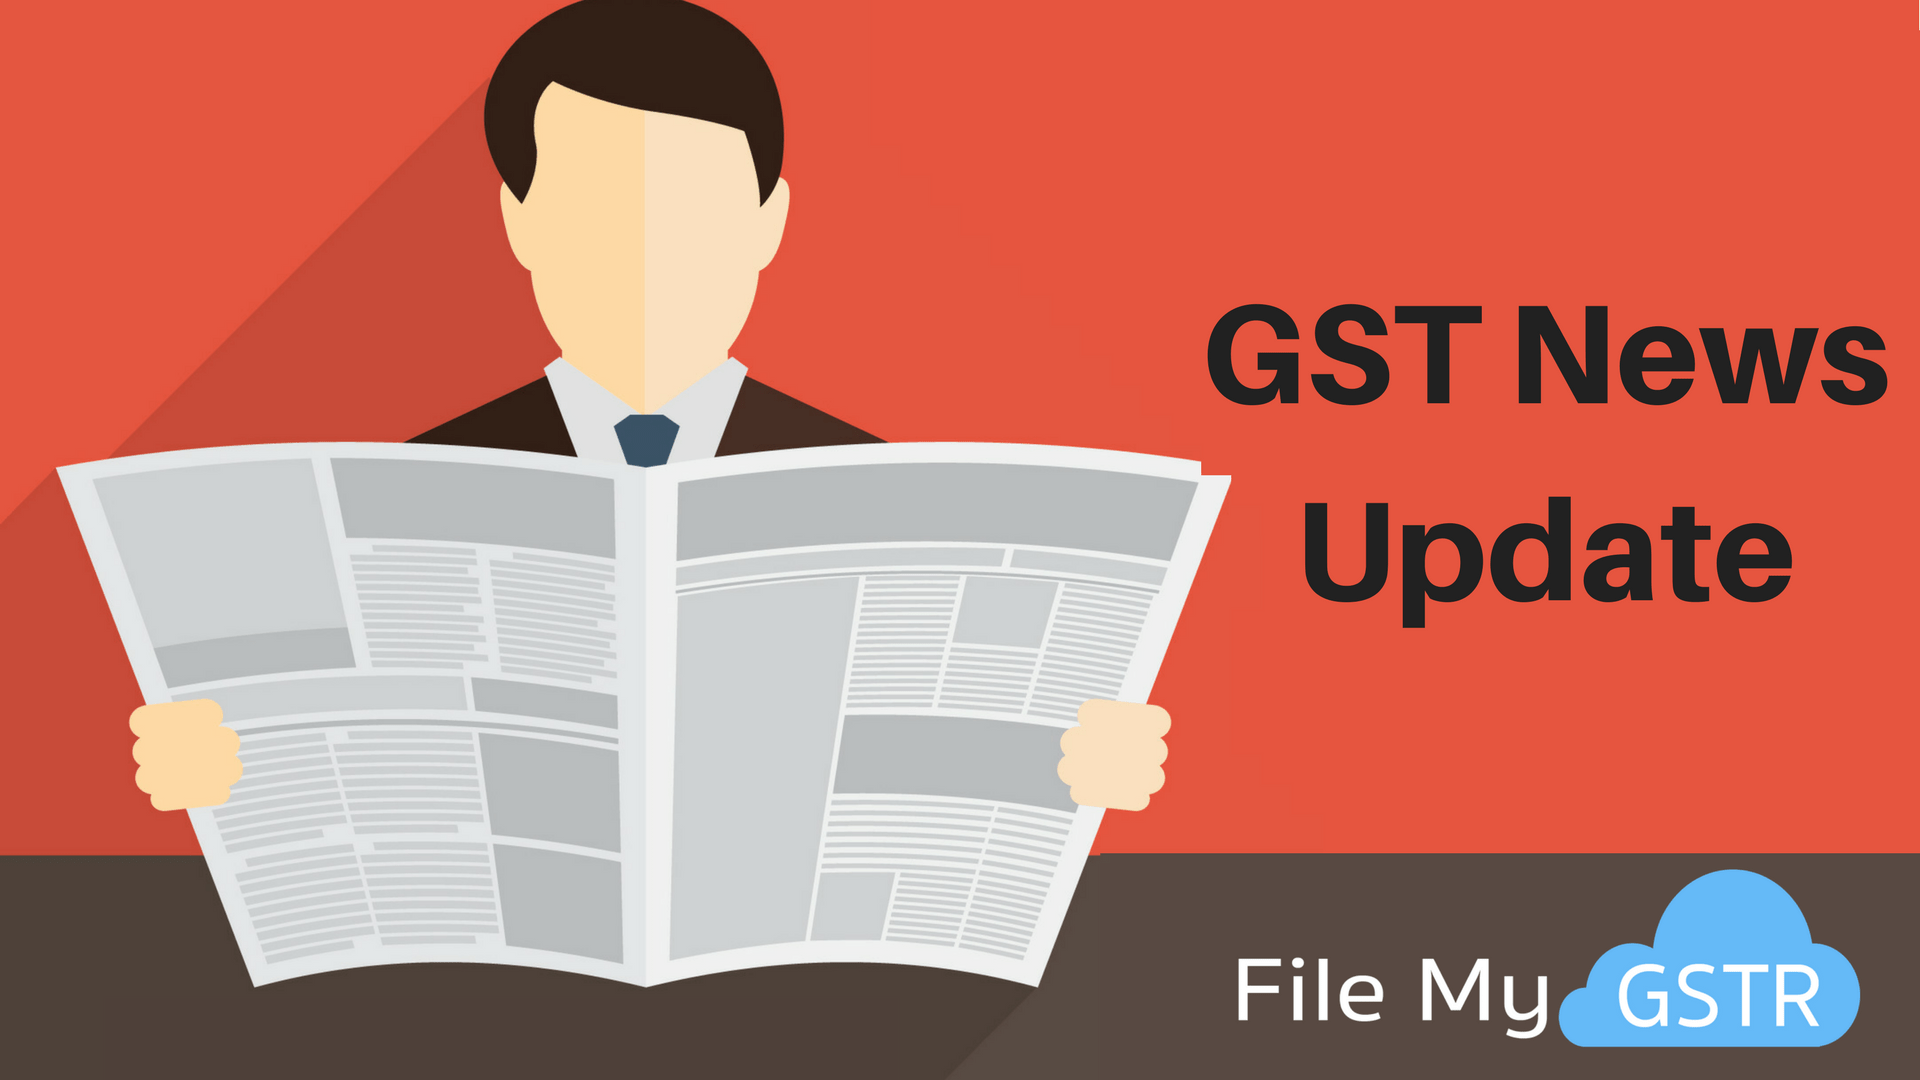 GST News Update